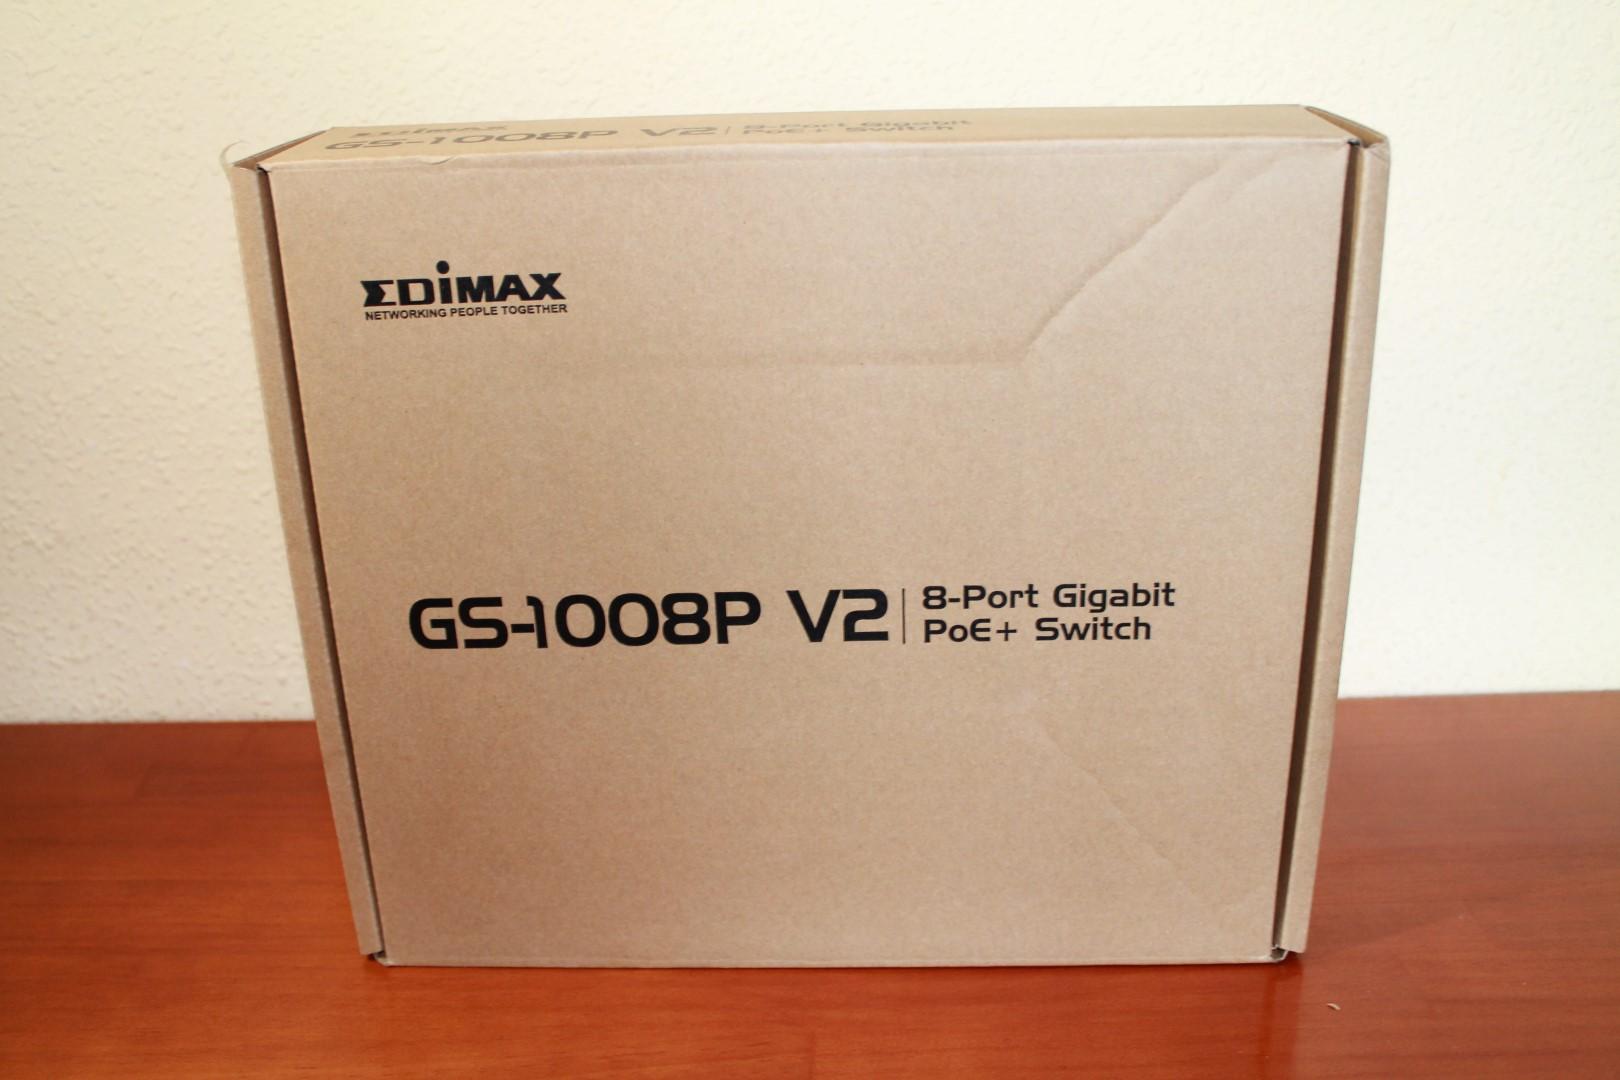 Imagen frontal del embalaje del switch Edimax GS-1008P V2